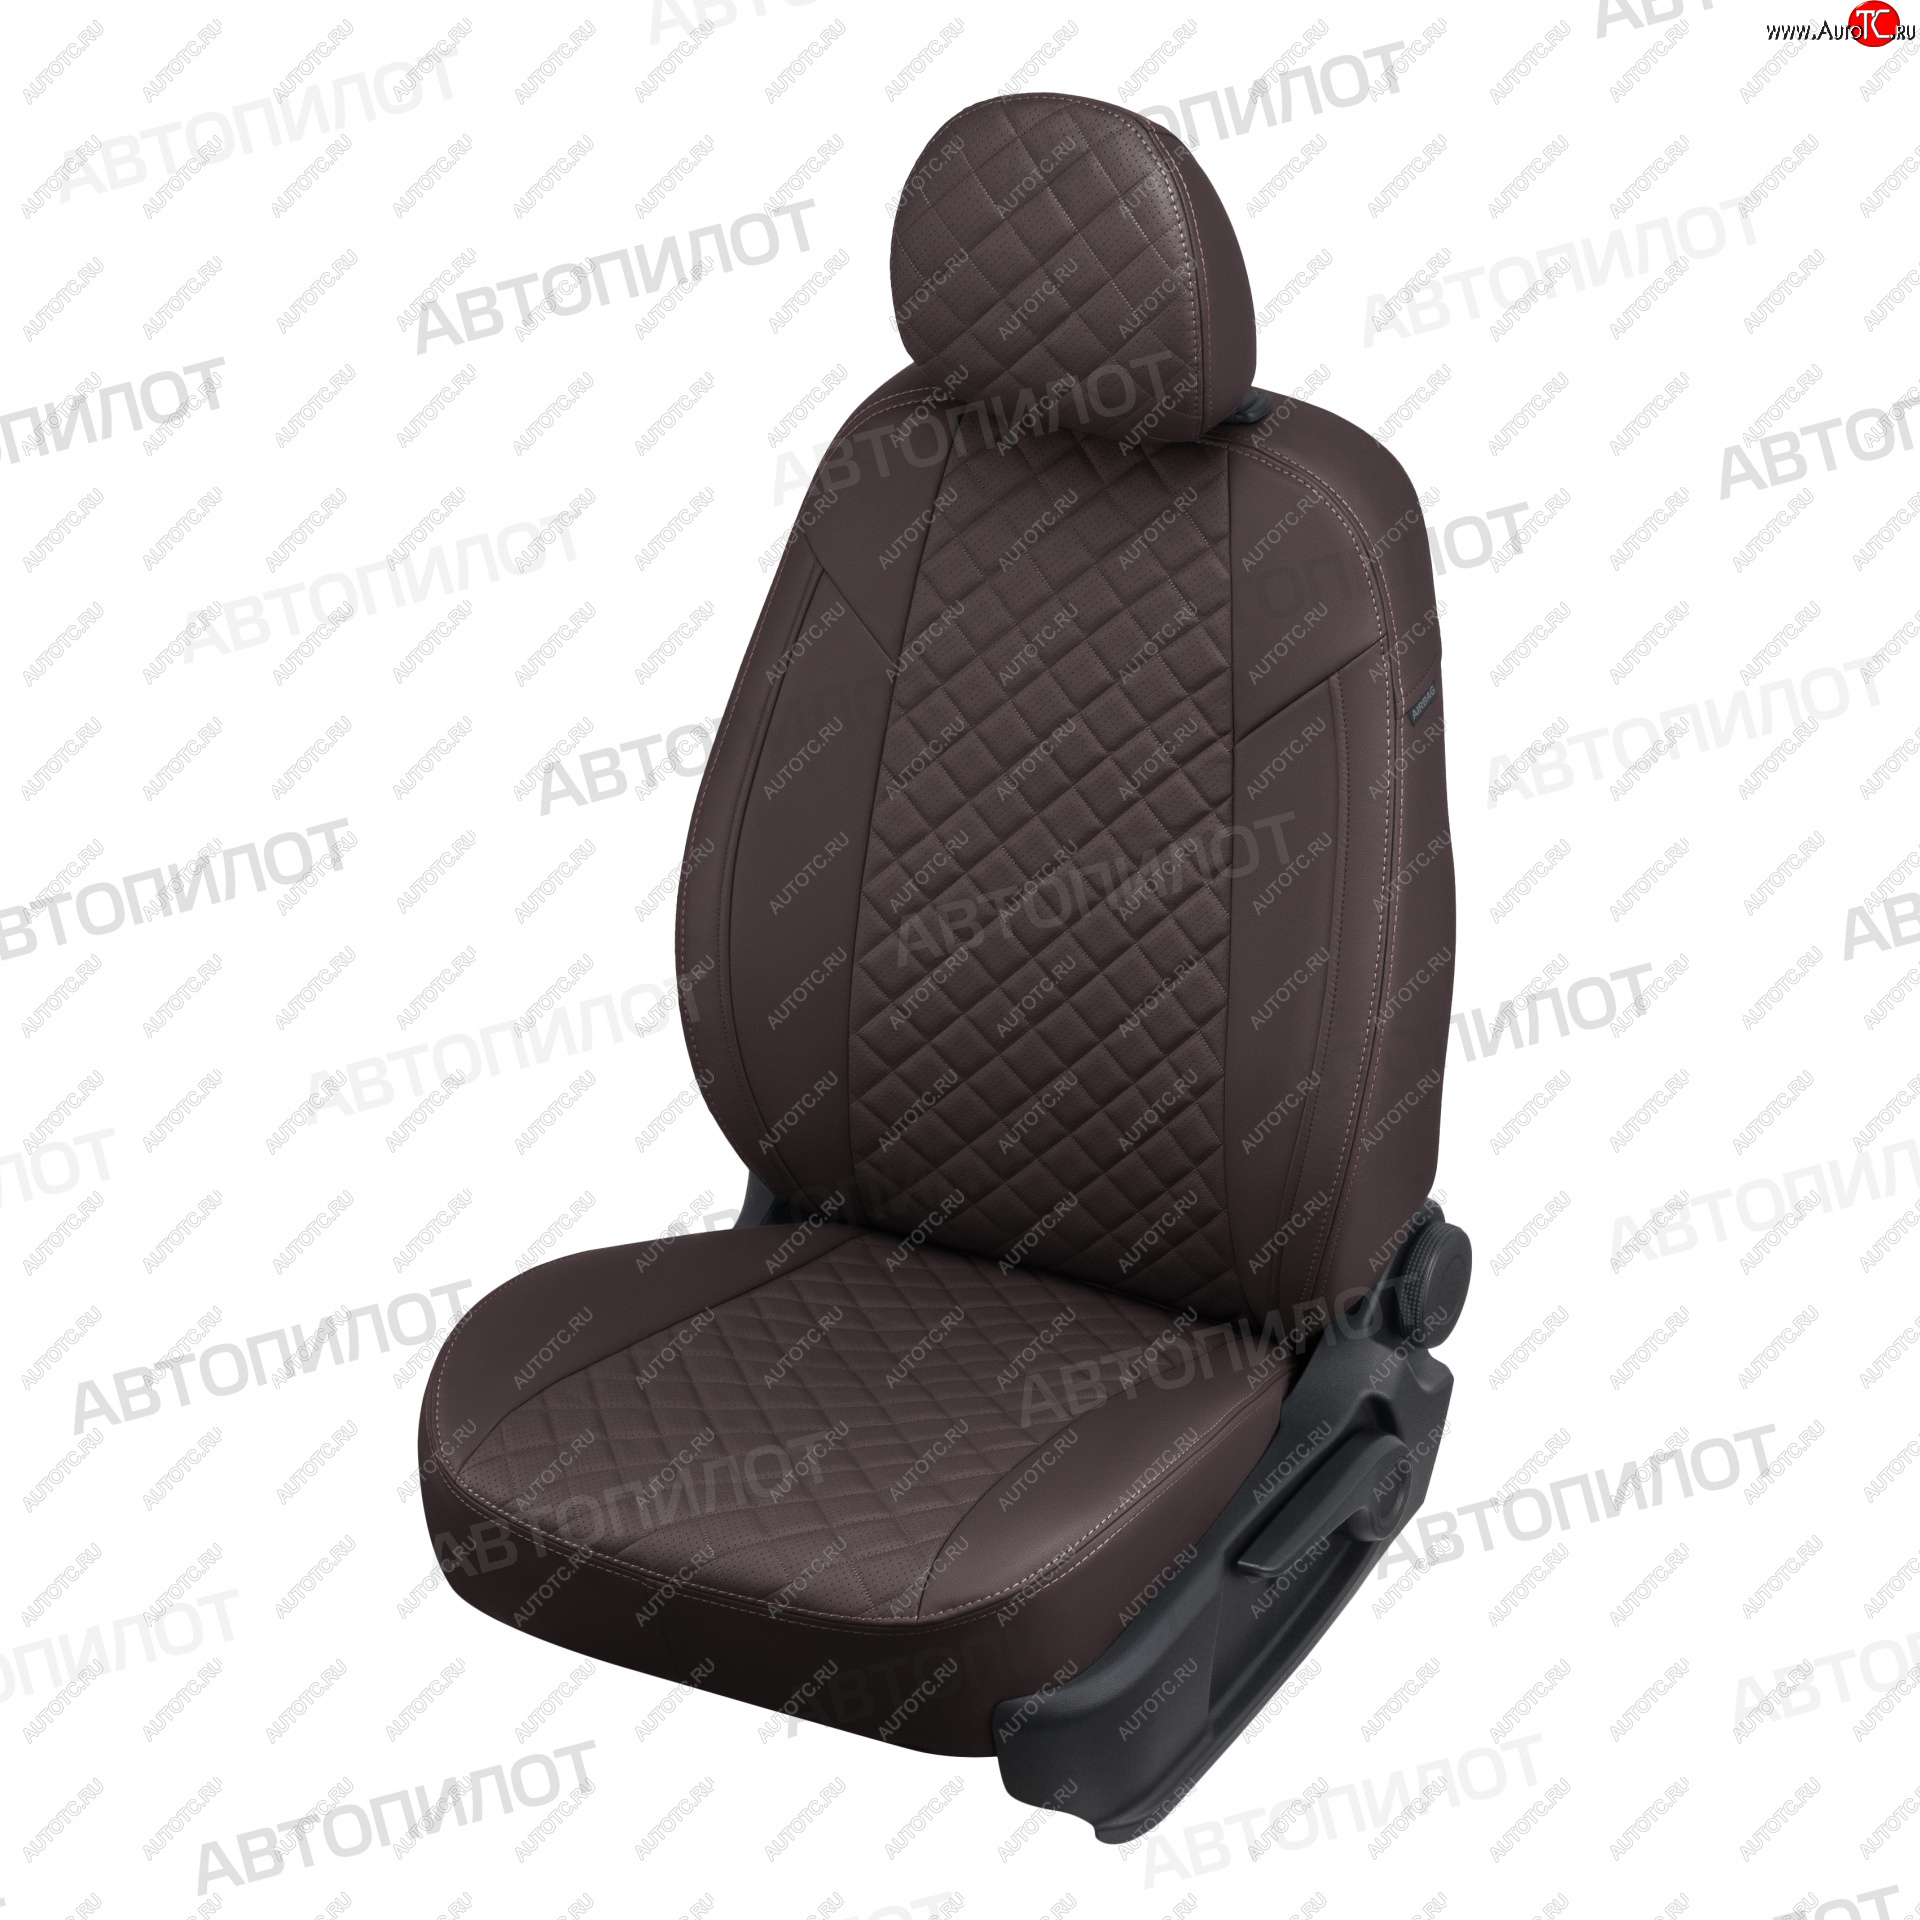 13 999 р. Чехлы сидений (экокожа, 40/60) Автопилот Ромб  Volkswagen Polo  9N1 (2001-2009) (шоколад)